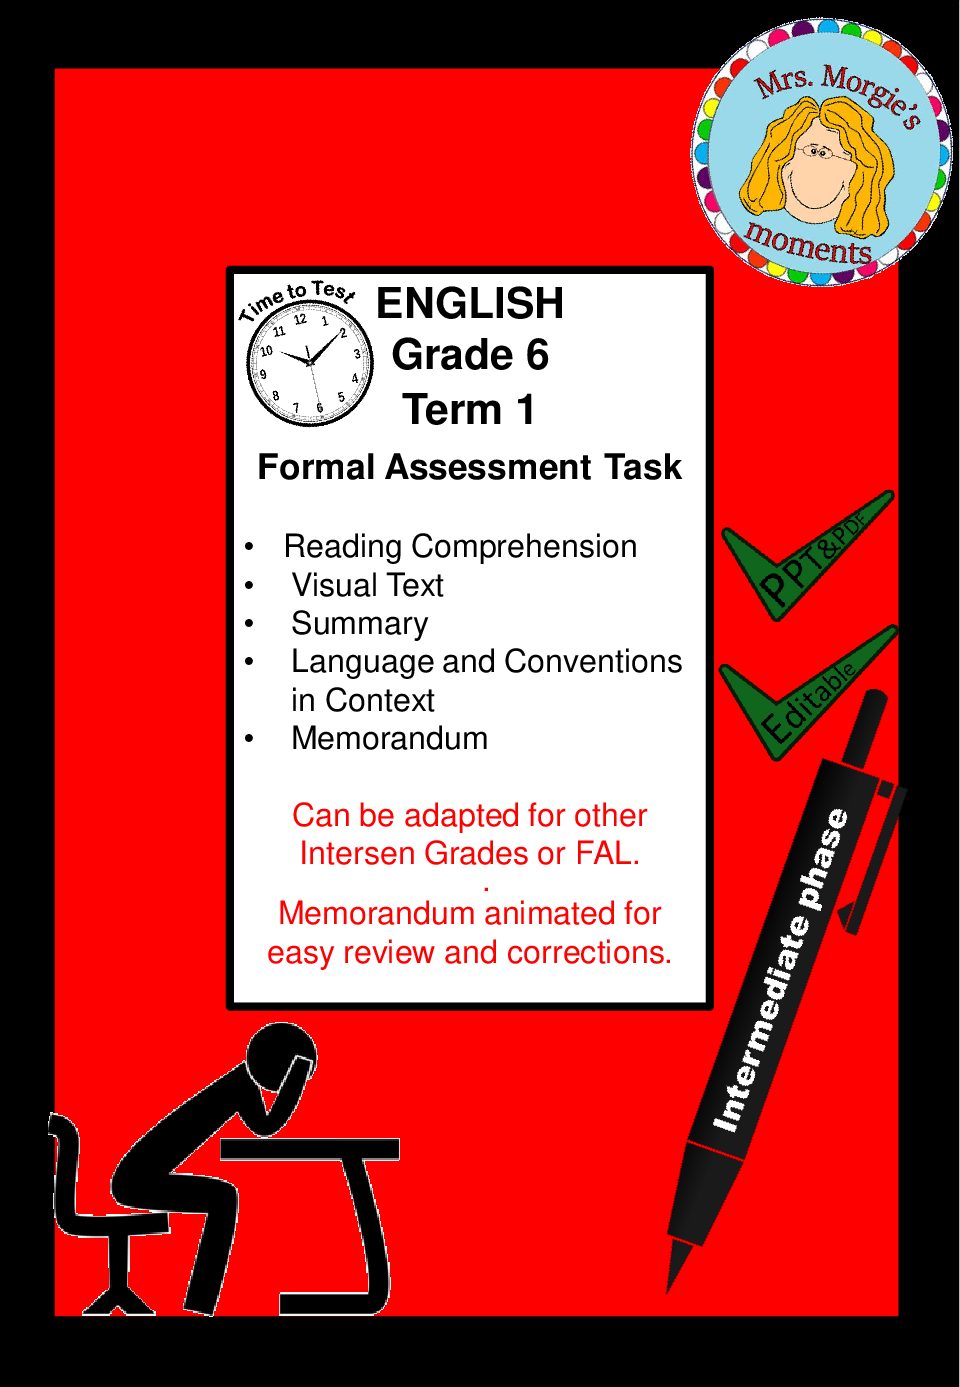 Englsih test term 1 cover